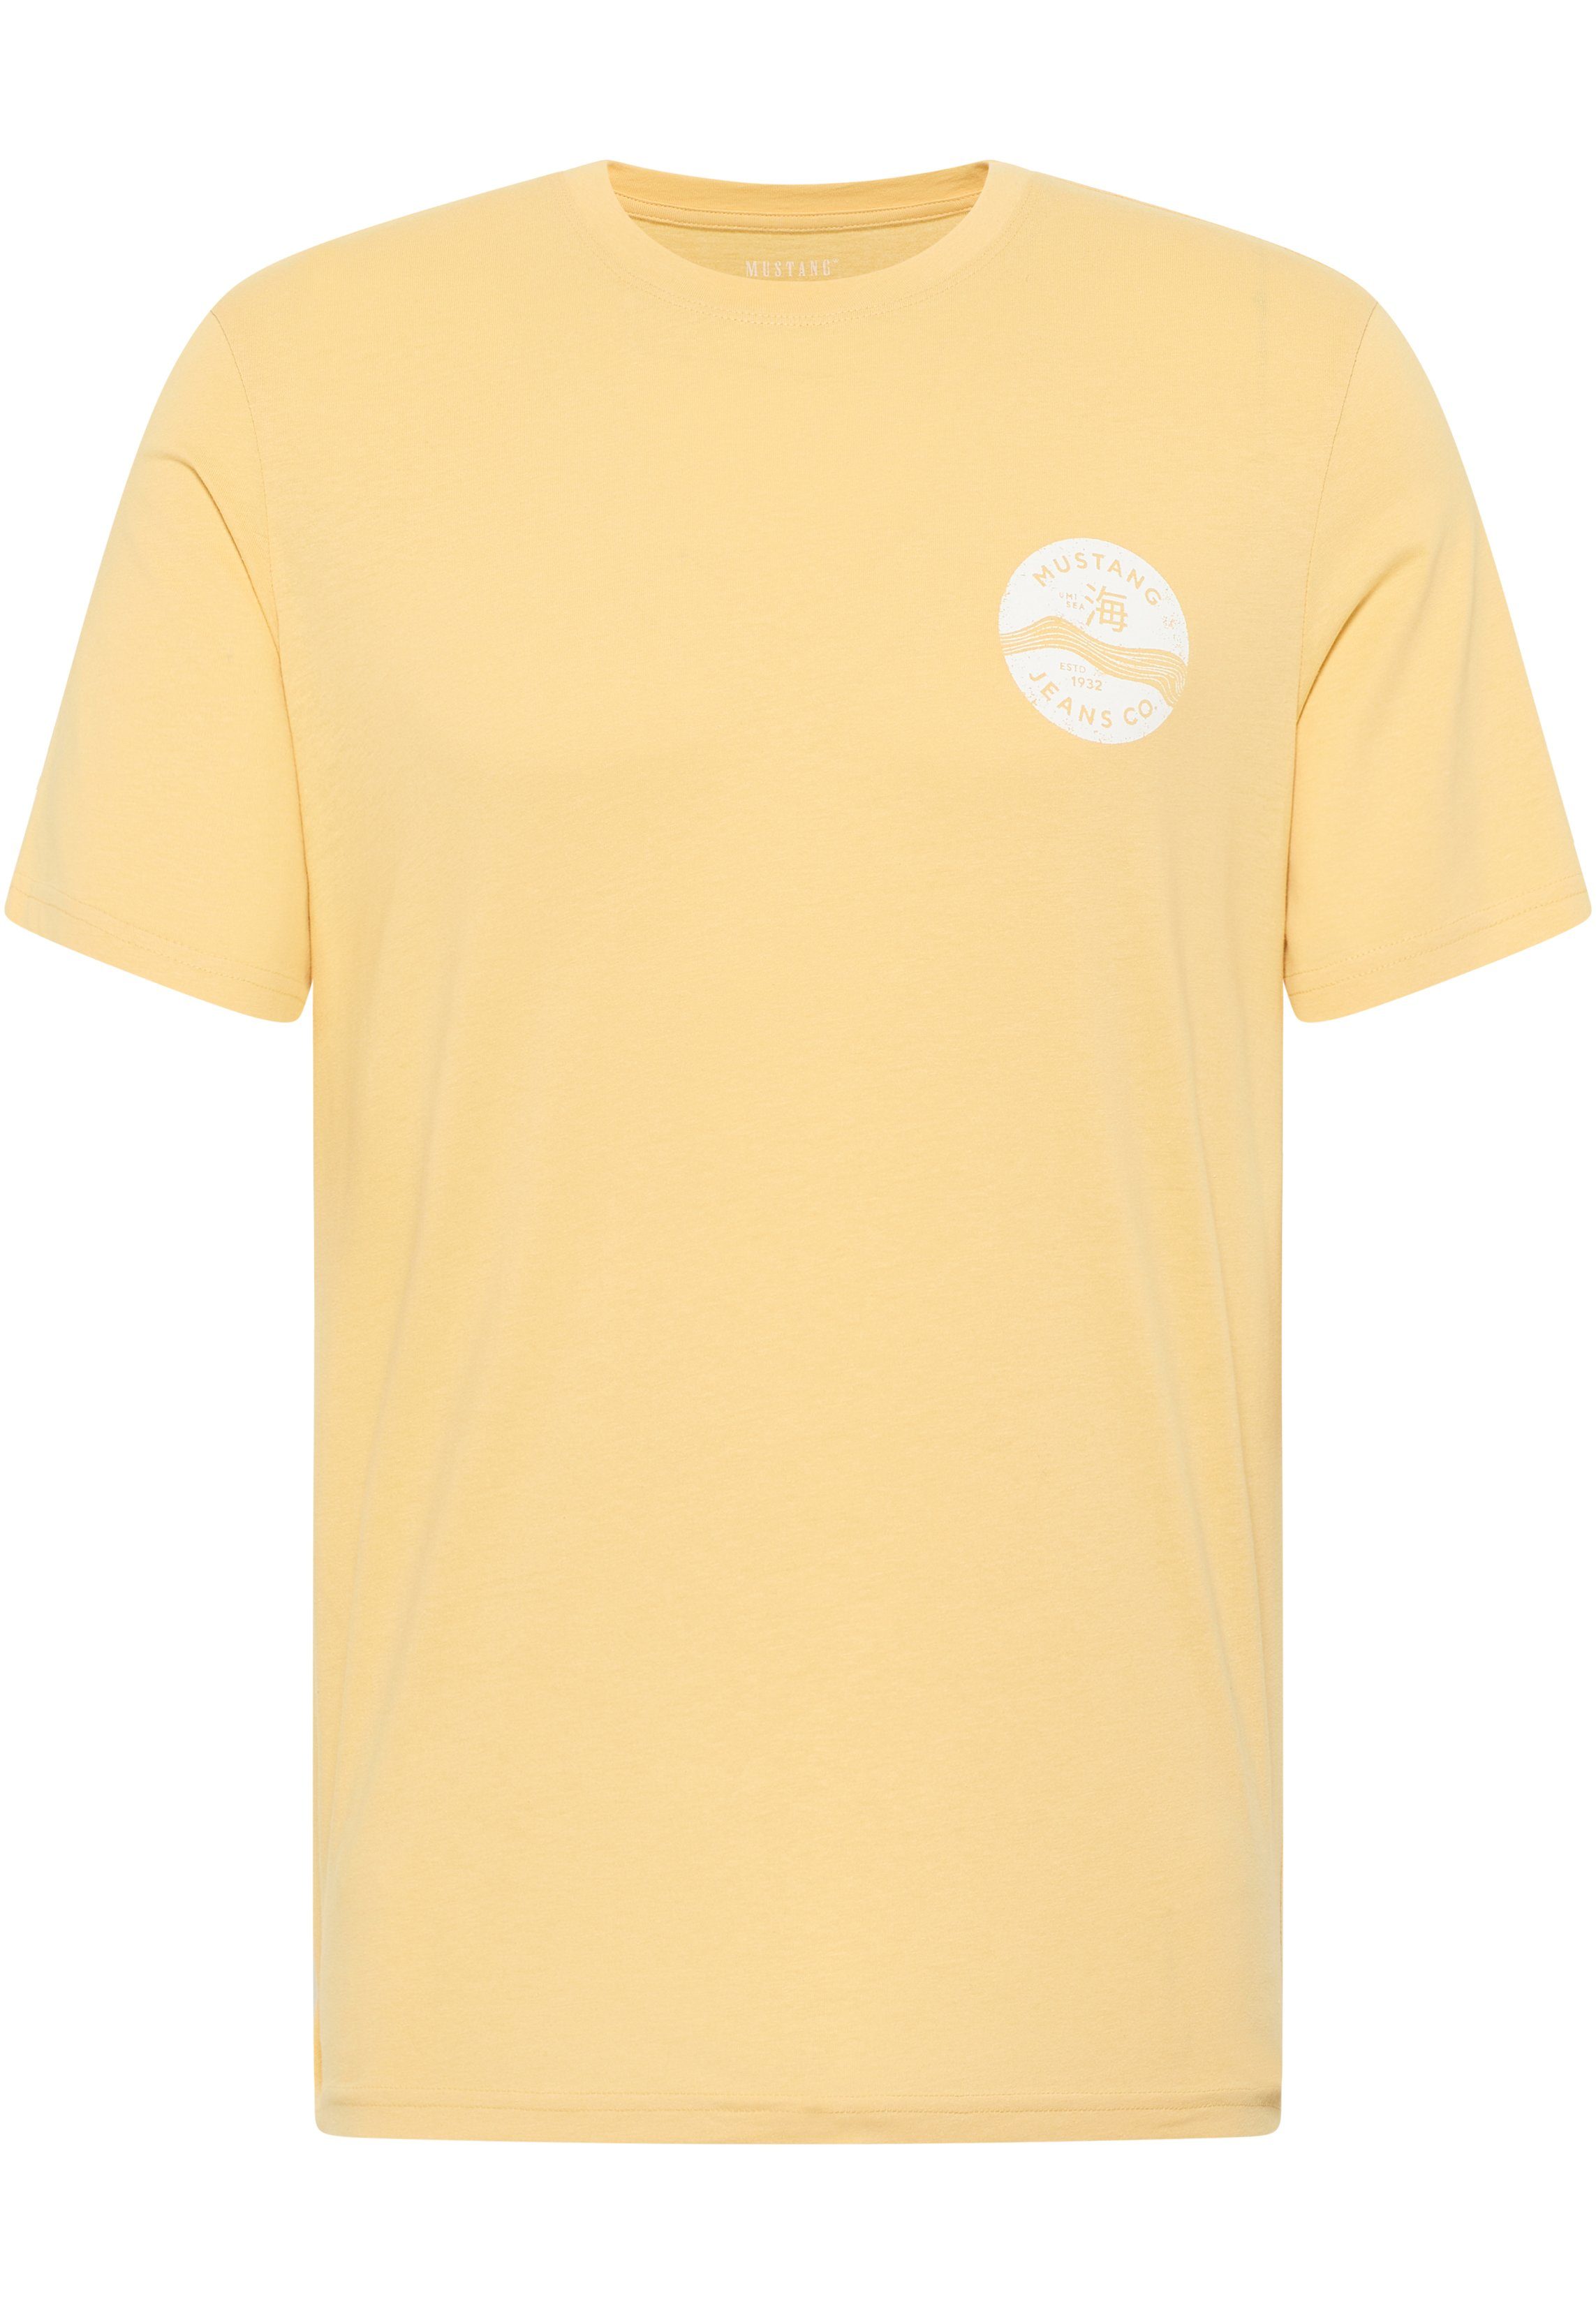 Kurzarmshirt Print-Shirt gelb MUSTANG Mustang